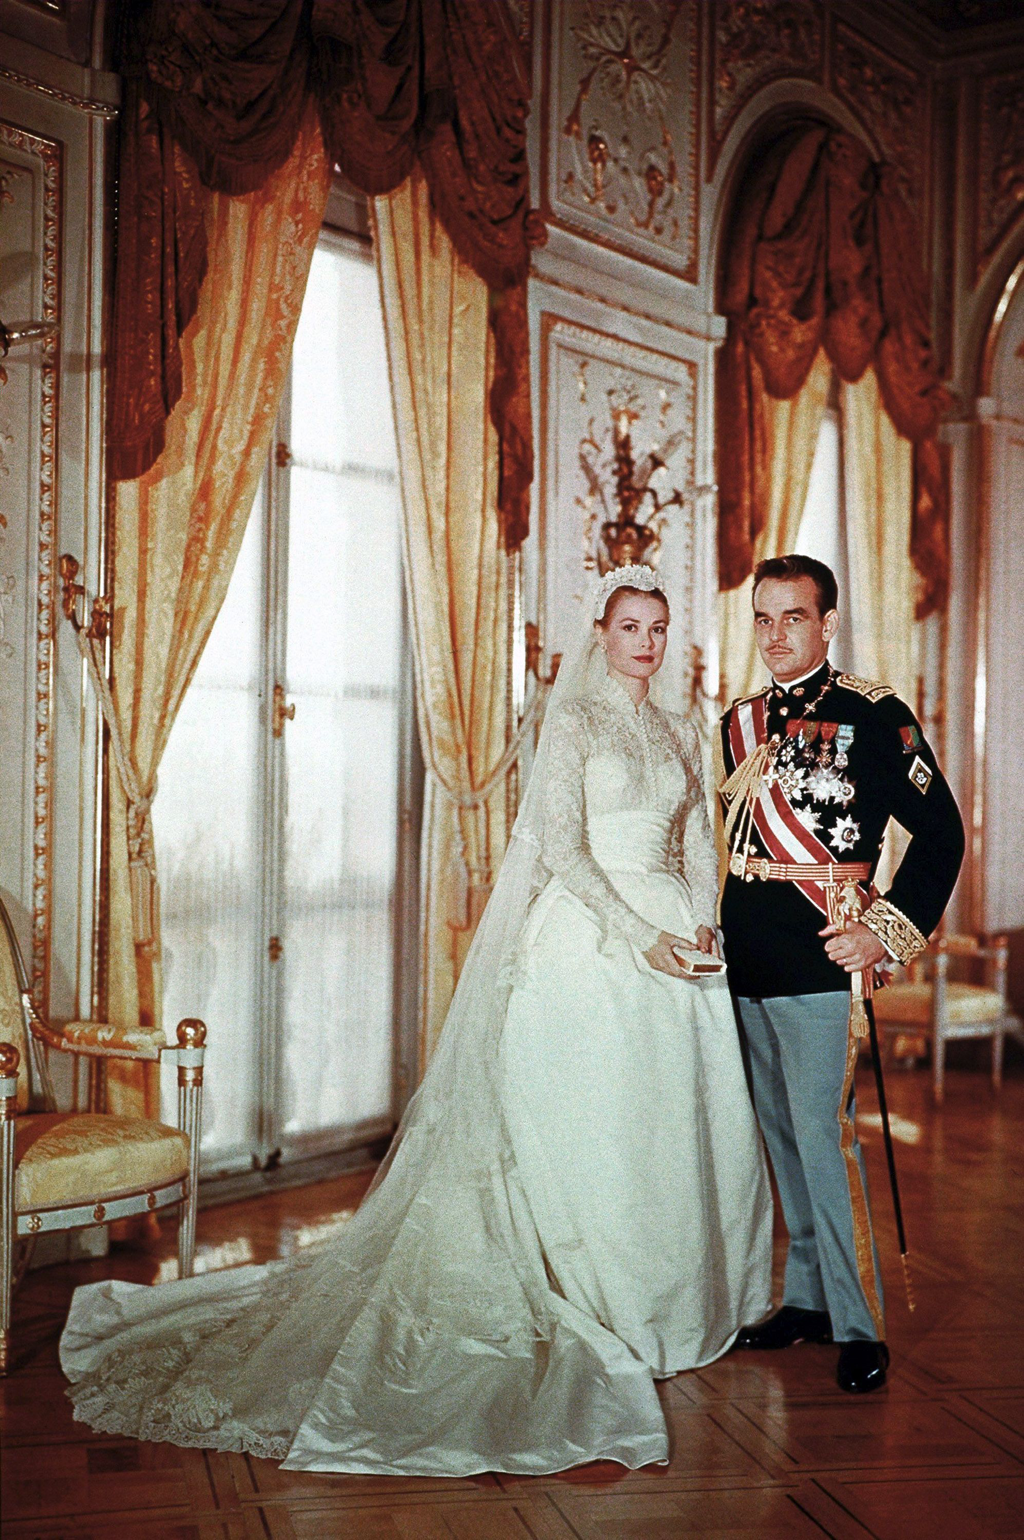 Grace Kelly with Prince Rainier II on their wedding day, 1956